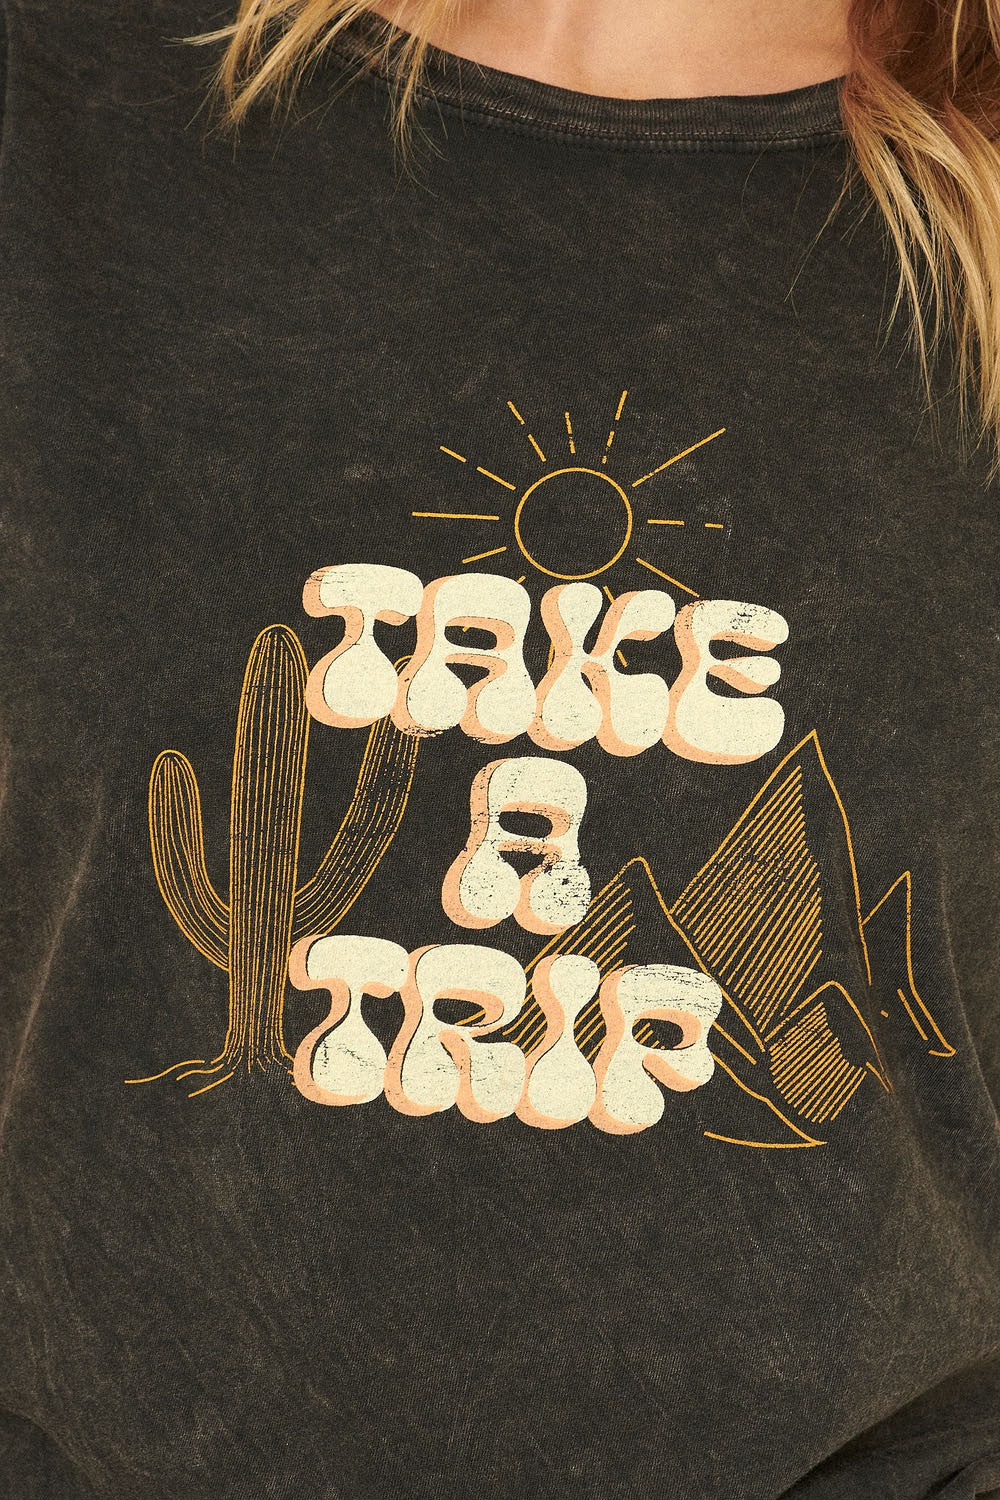 The Take a Trip Graphic Tee